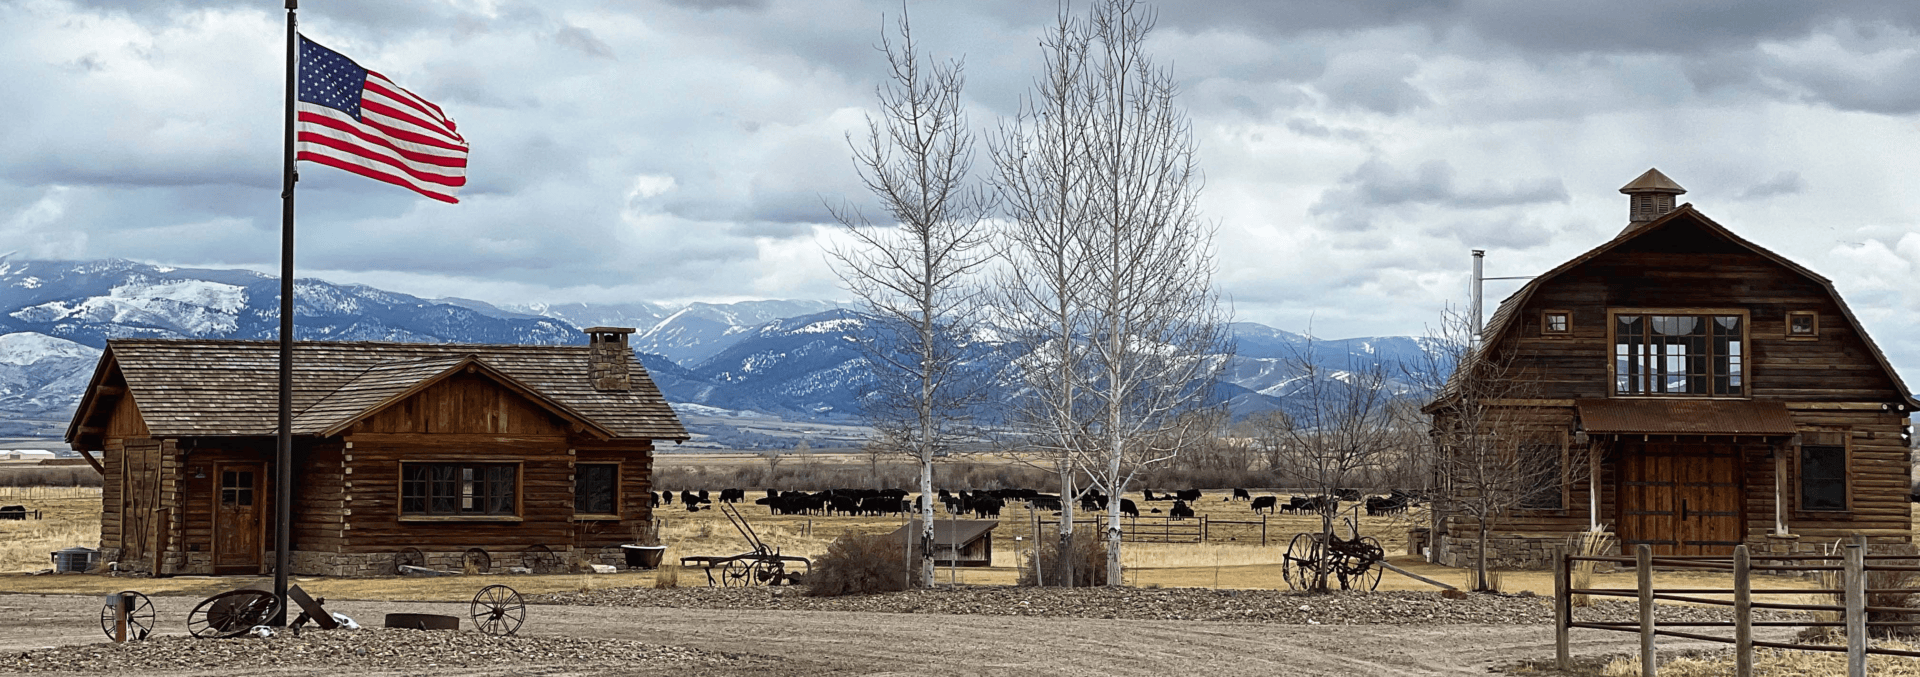 montana ranch for sale beaverhead river cattle ranch 3